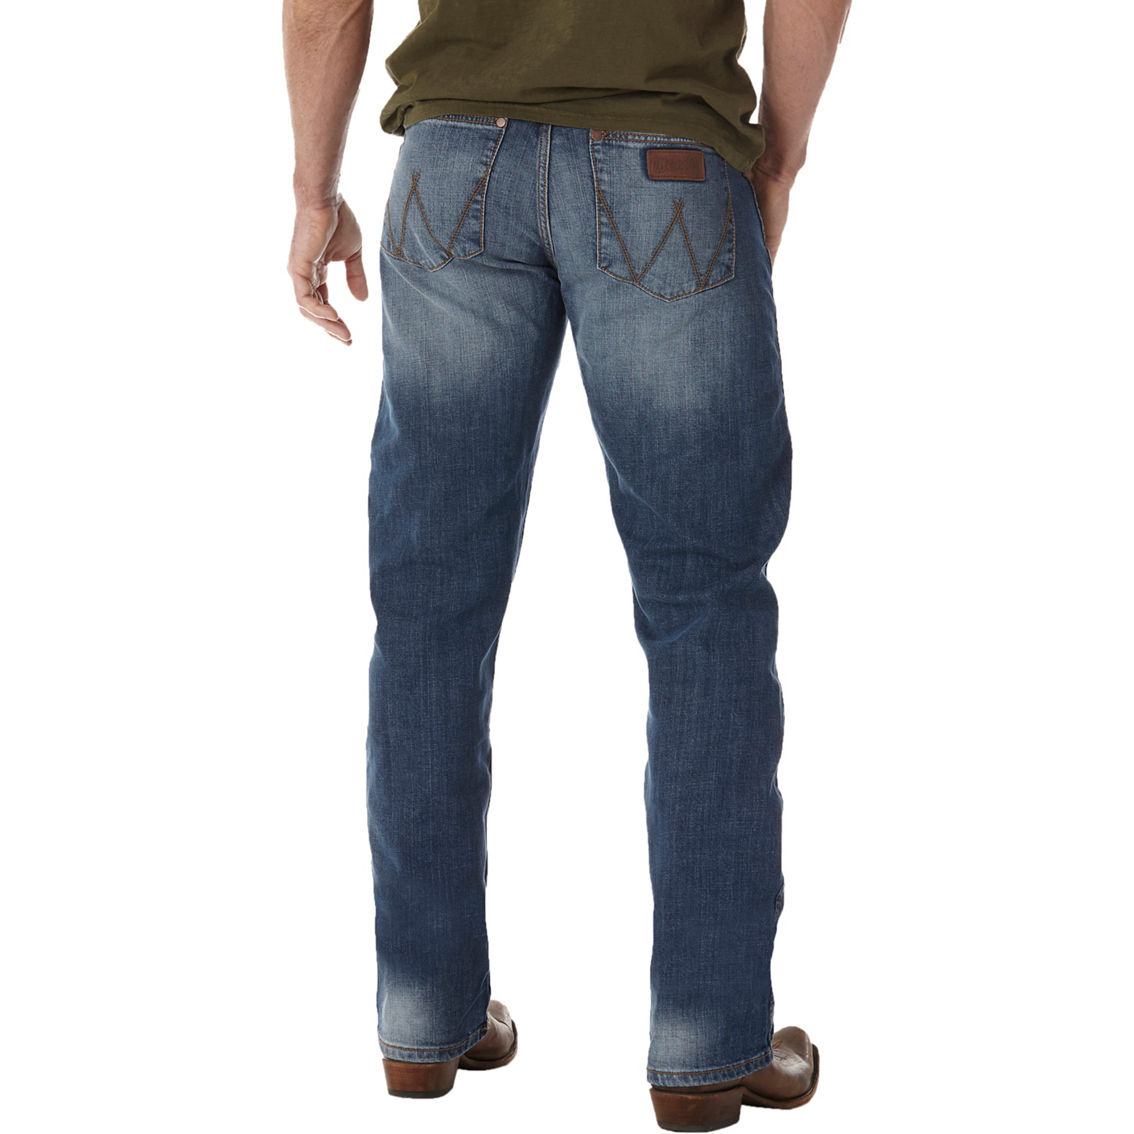 Wrangler Retro Slim Fit Straight Leg Cottonwood Jeans - Image 2 of 3